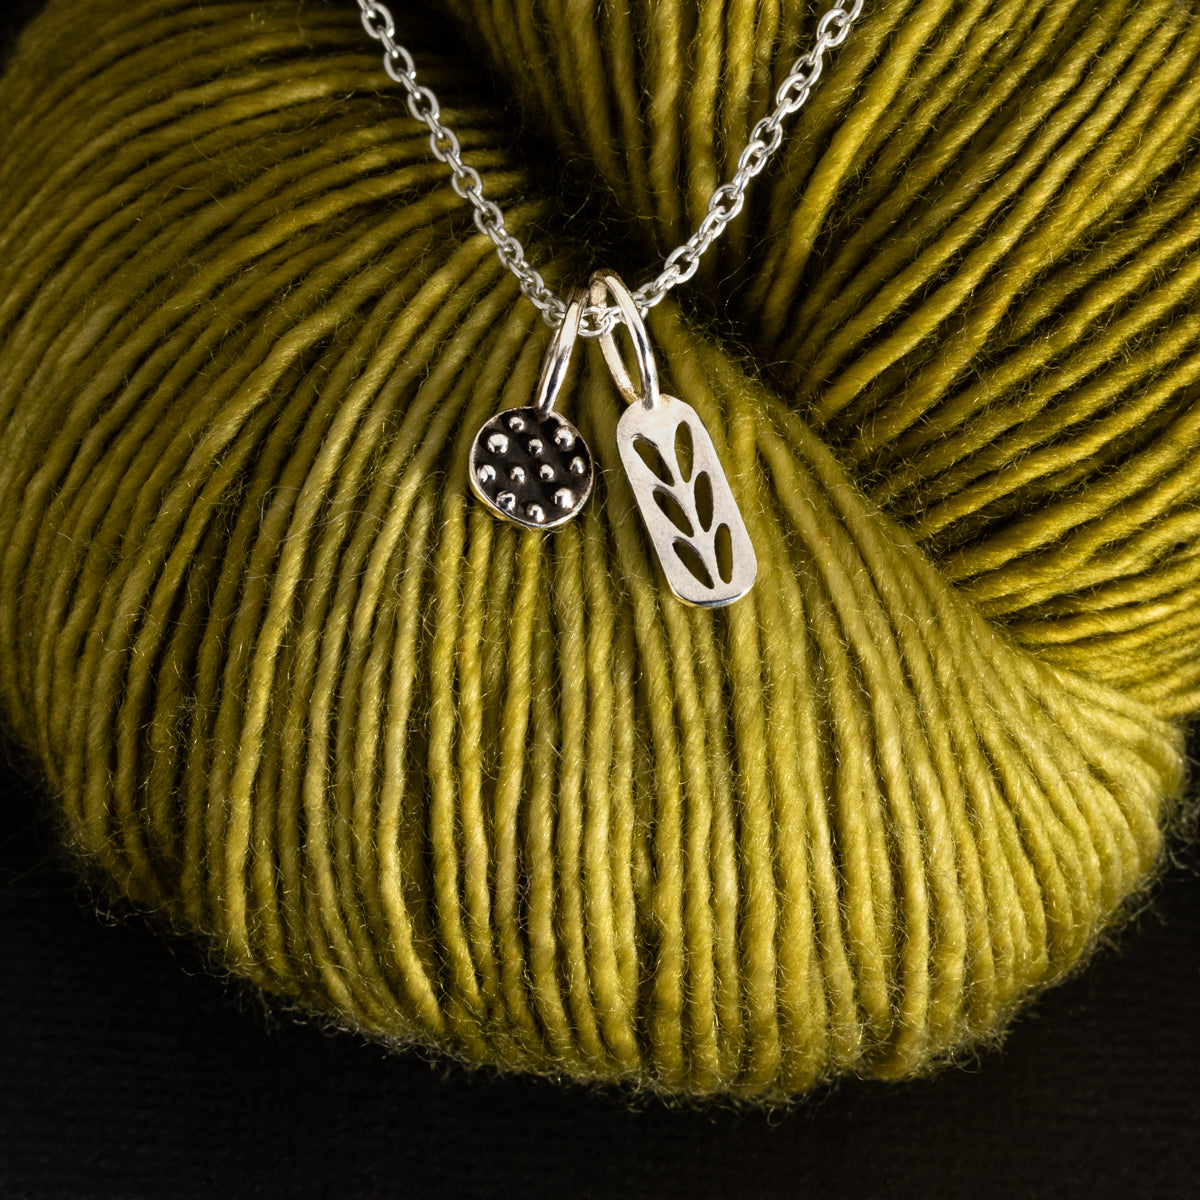 SALE! Stockinette Stitch & Demi-Sec Stitch Markers Necklace- In Case Of A Knit Marker Emergency